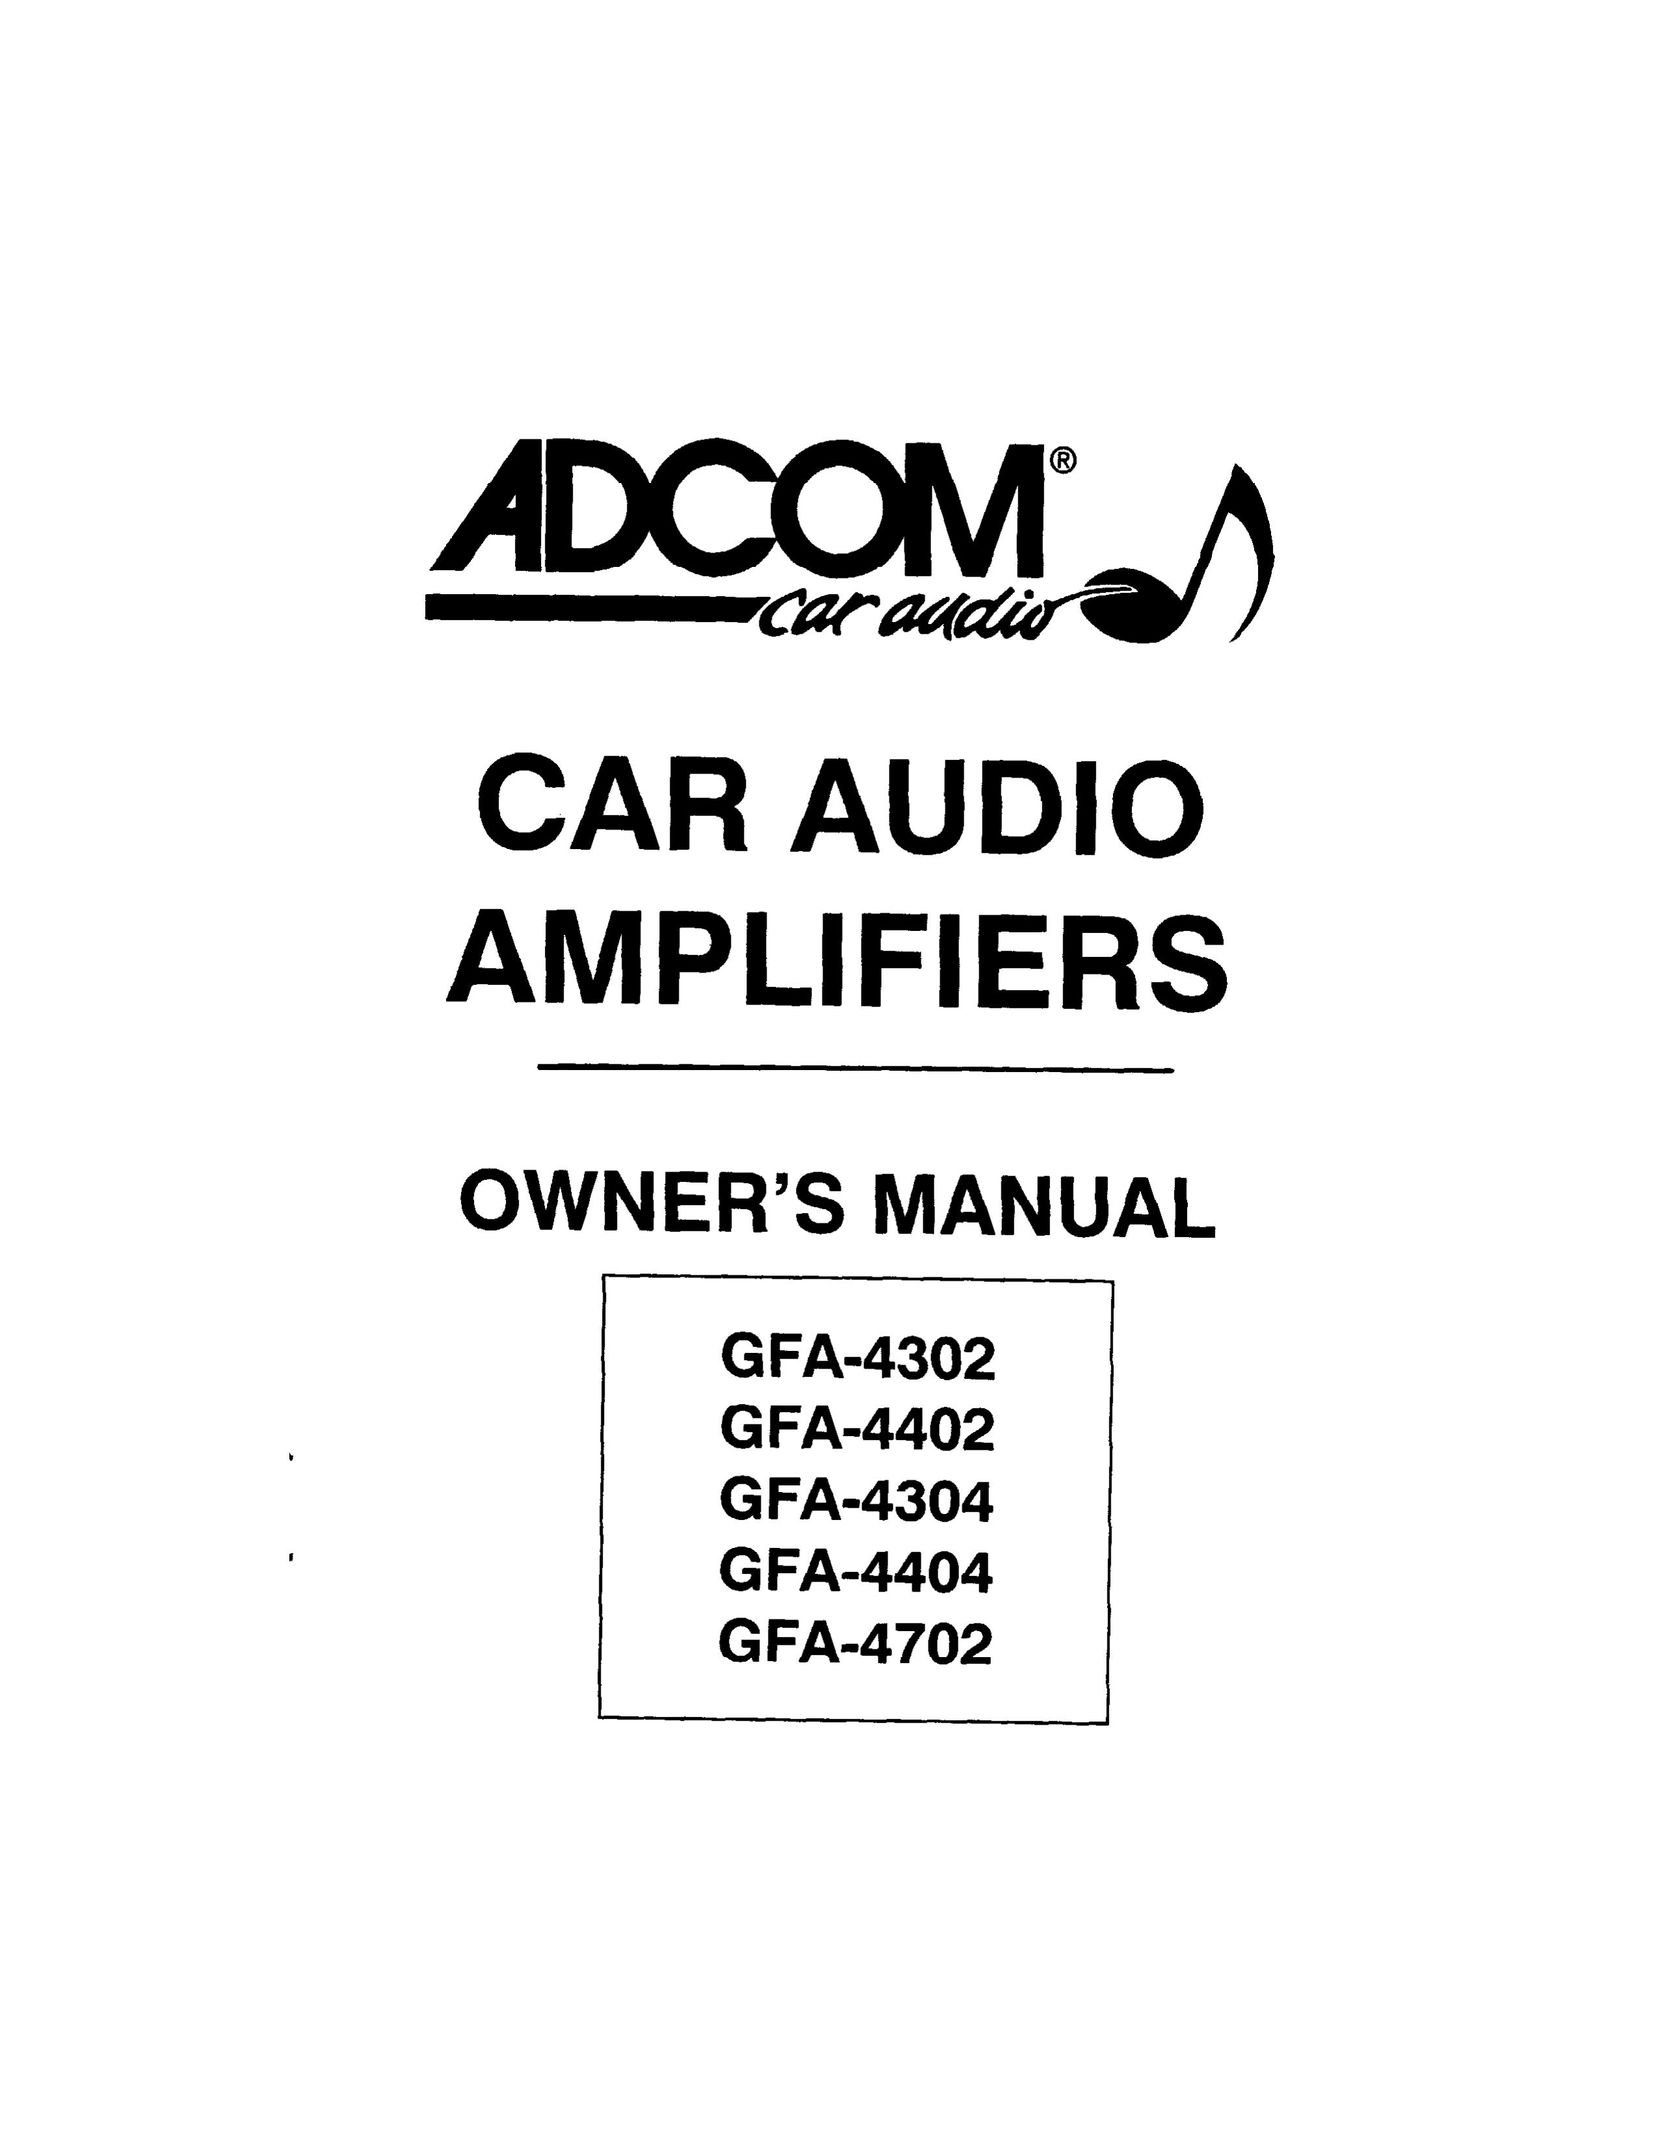 Adcom GFA-4404 Car Amplifier User Manual